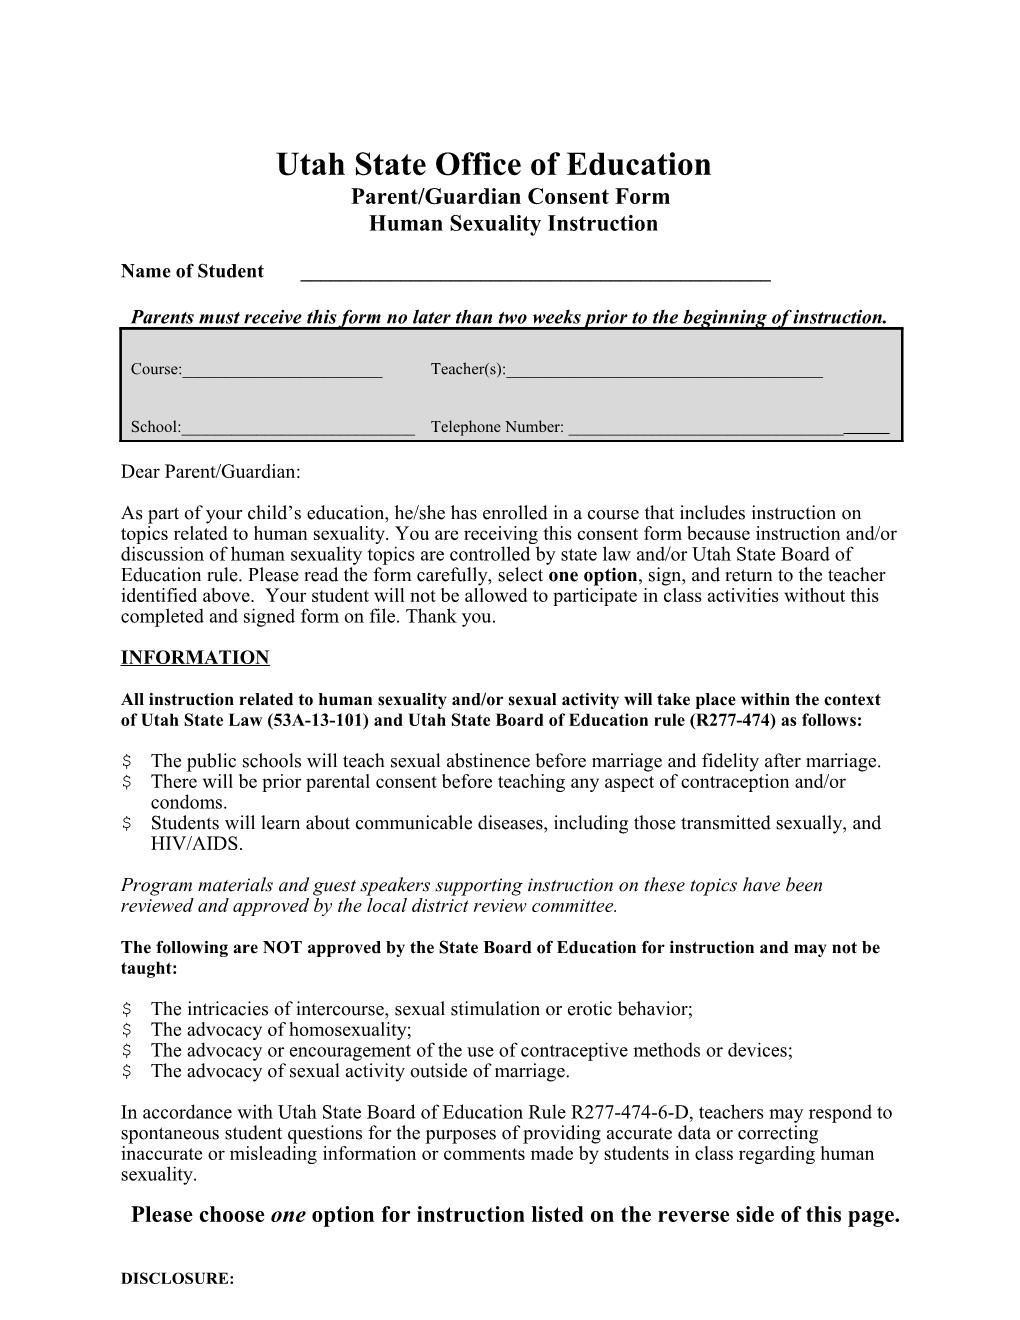 Utah State Office of Education (DRAFT)